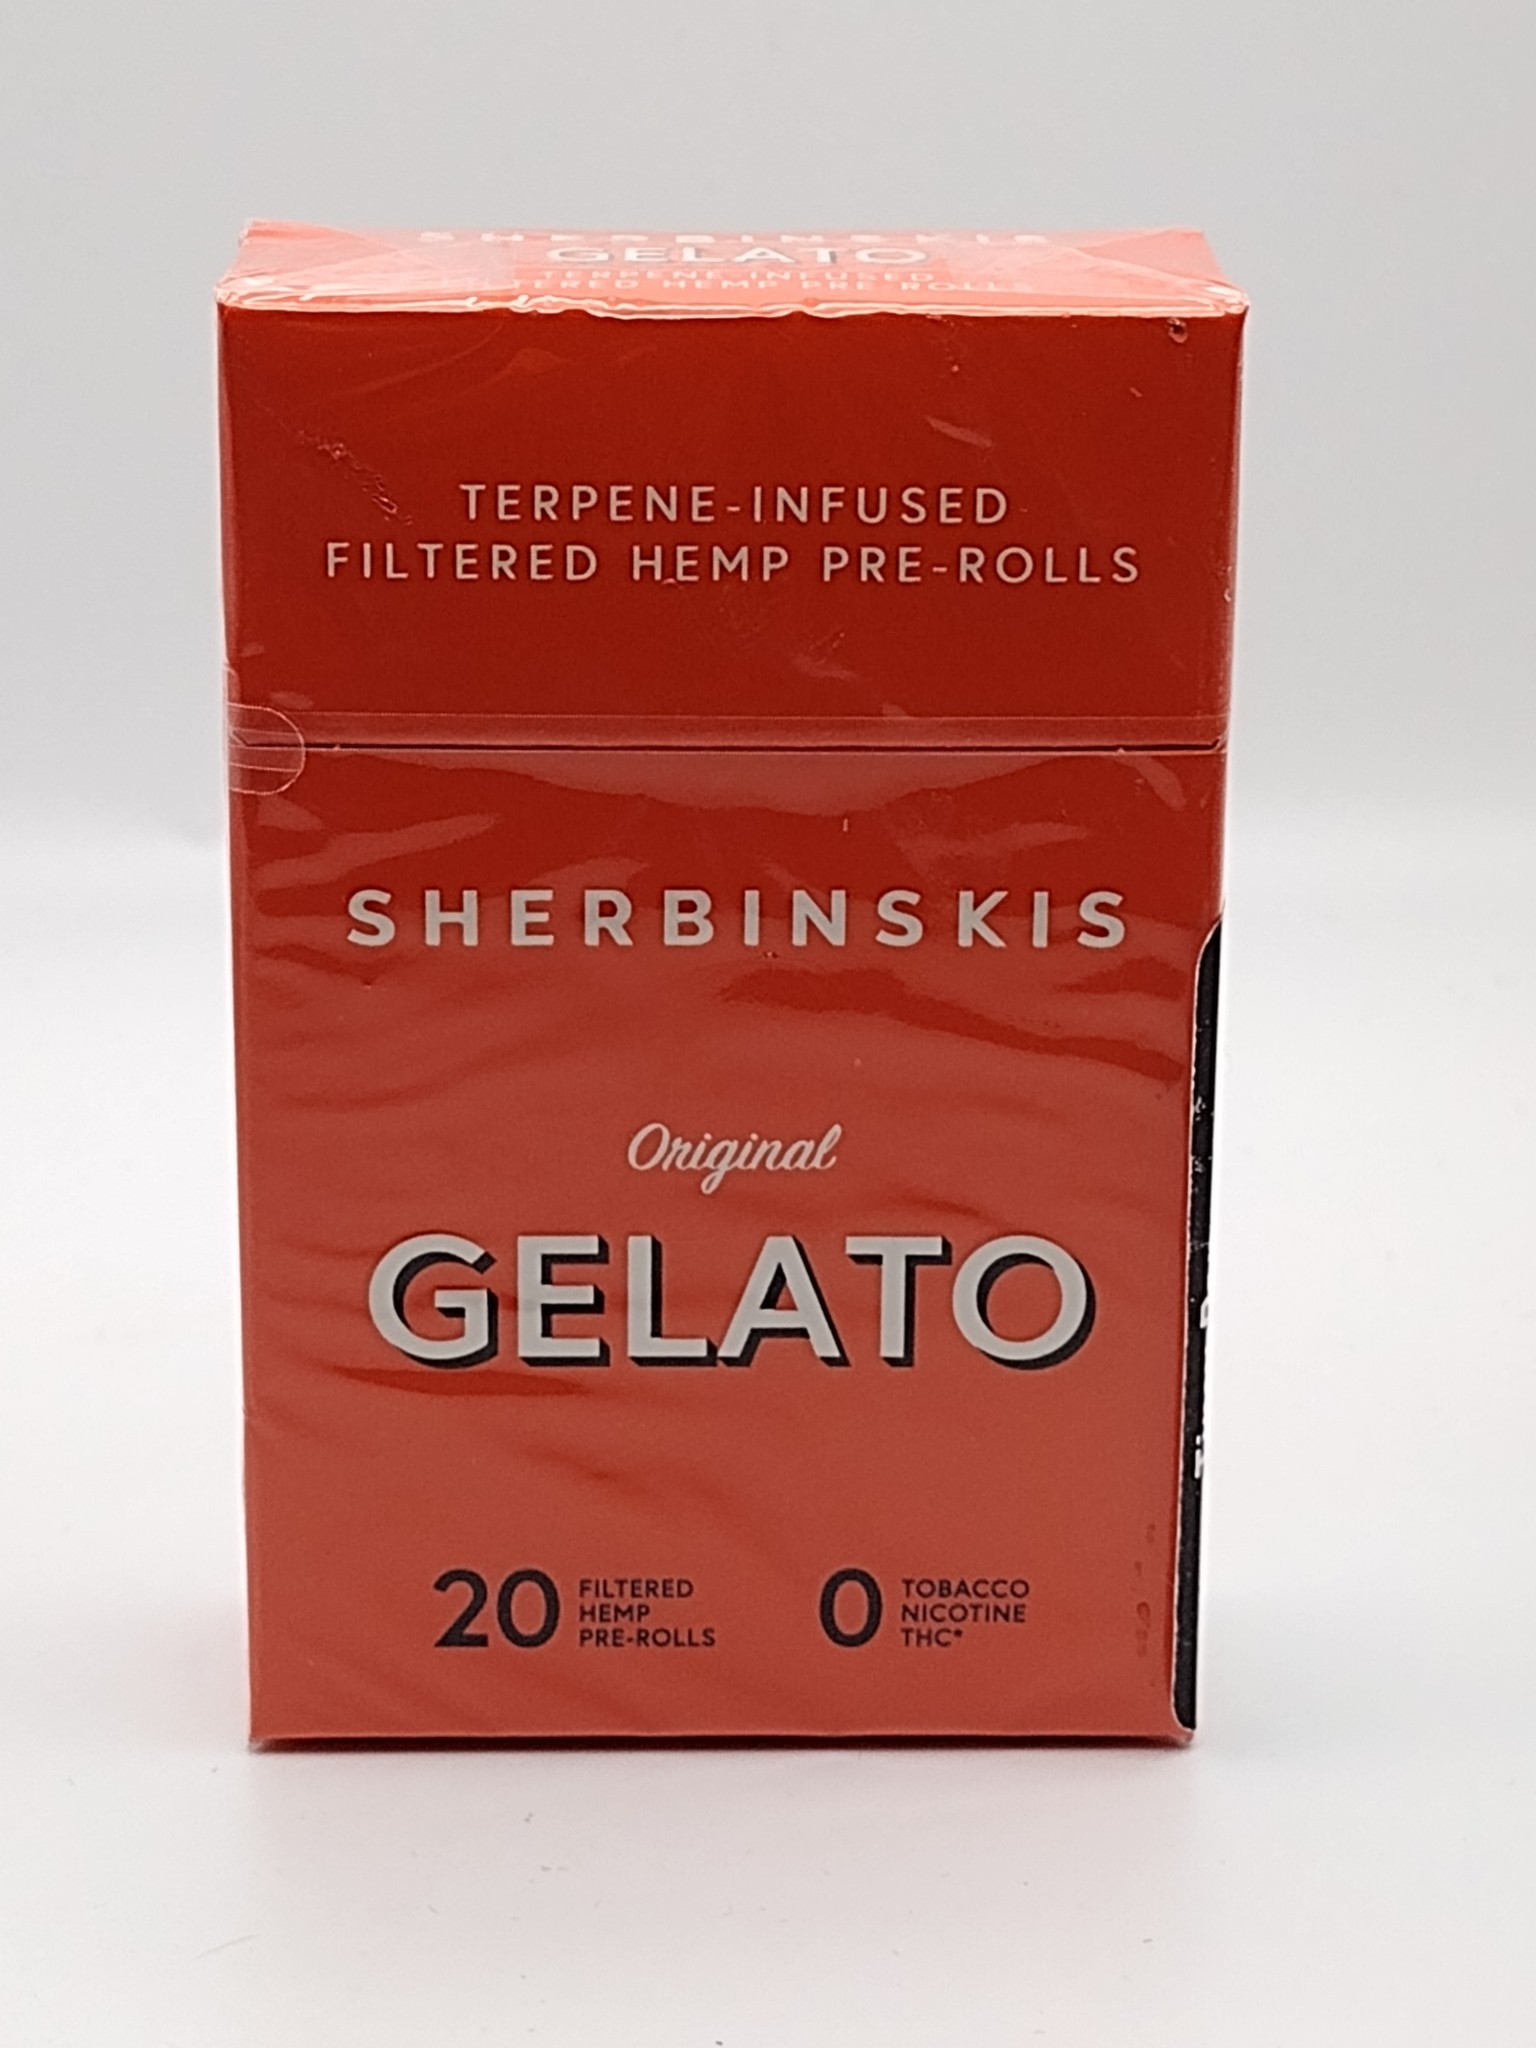 Sherbinskis Gelato Hemp Cigarettes